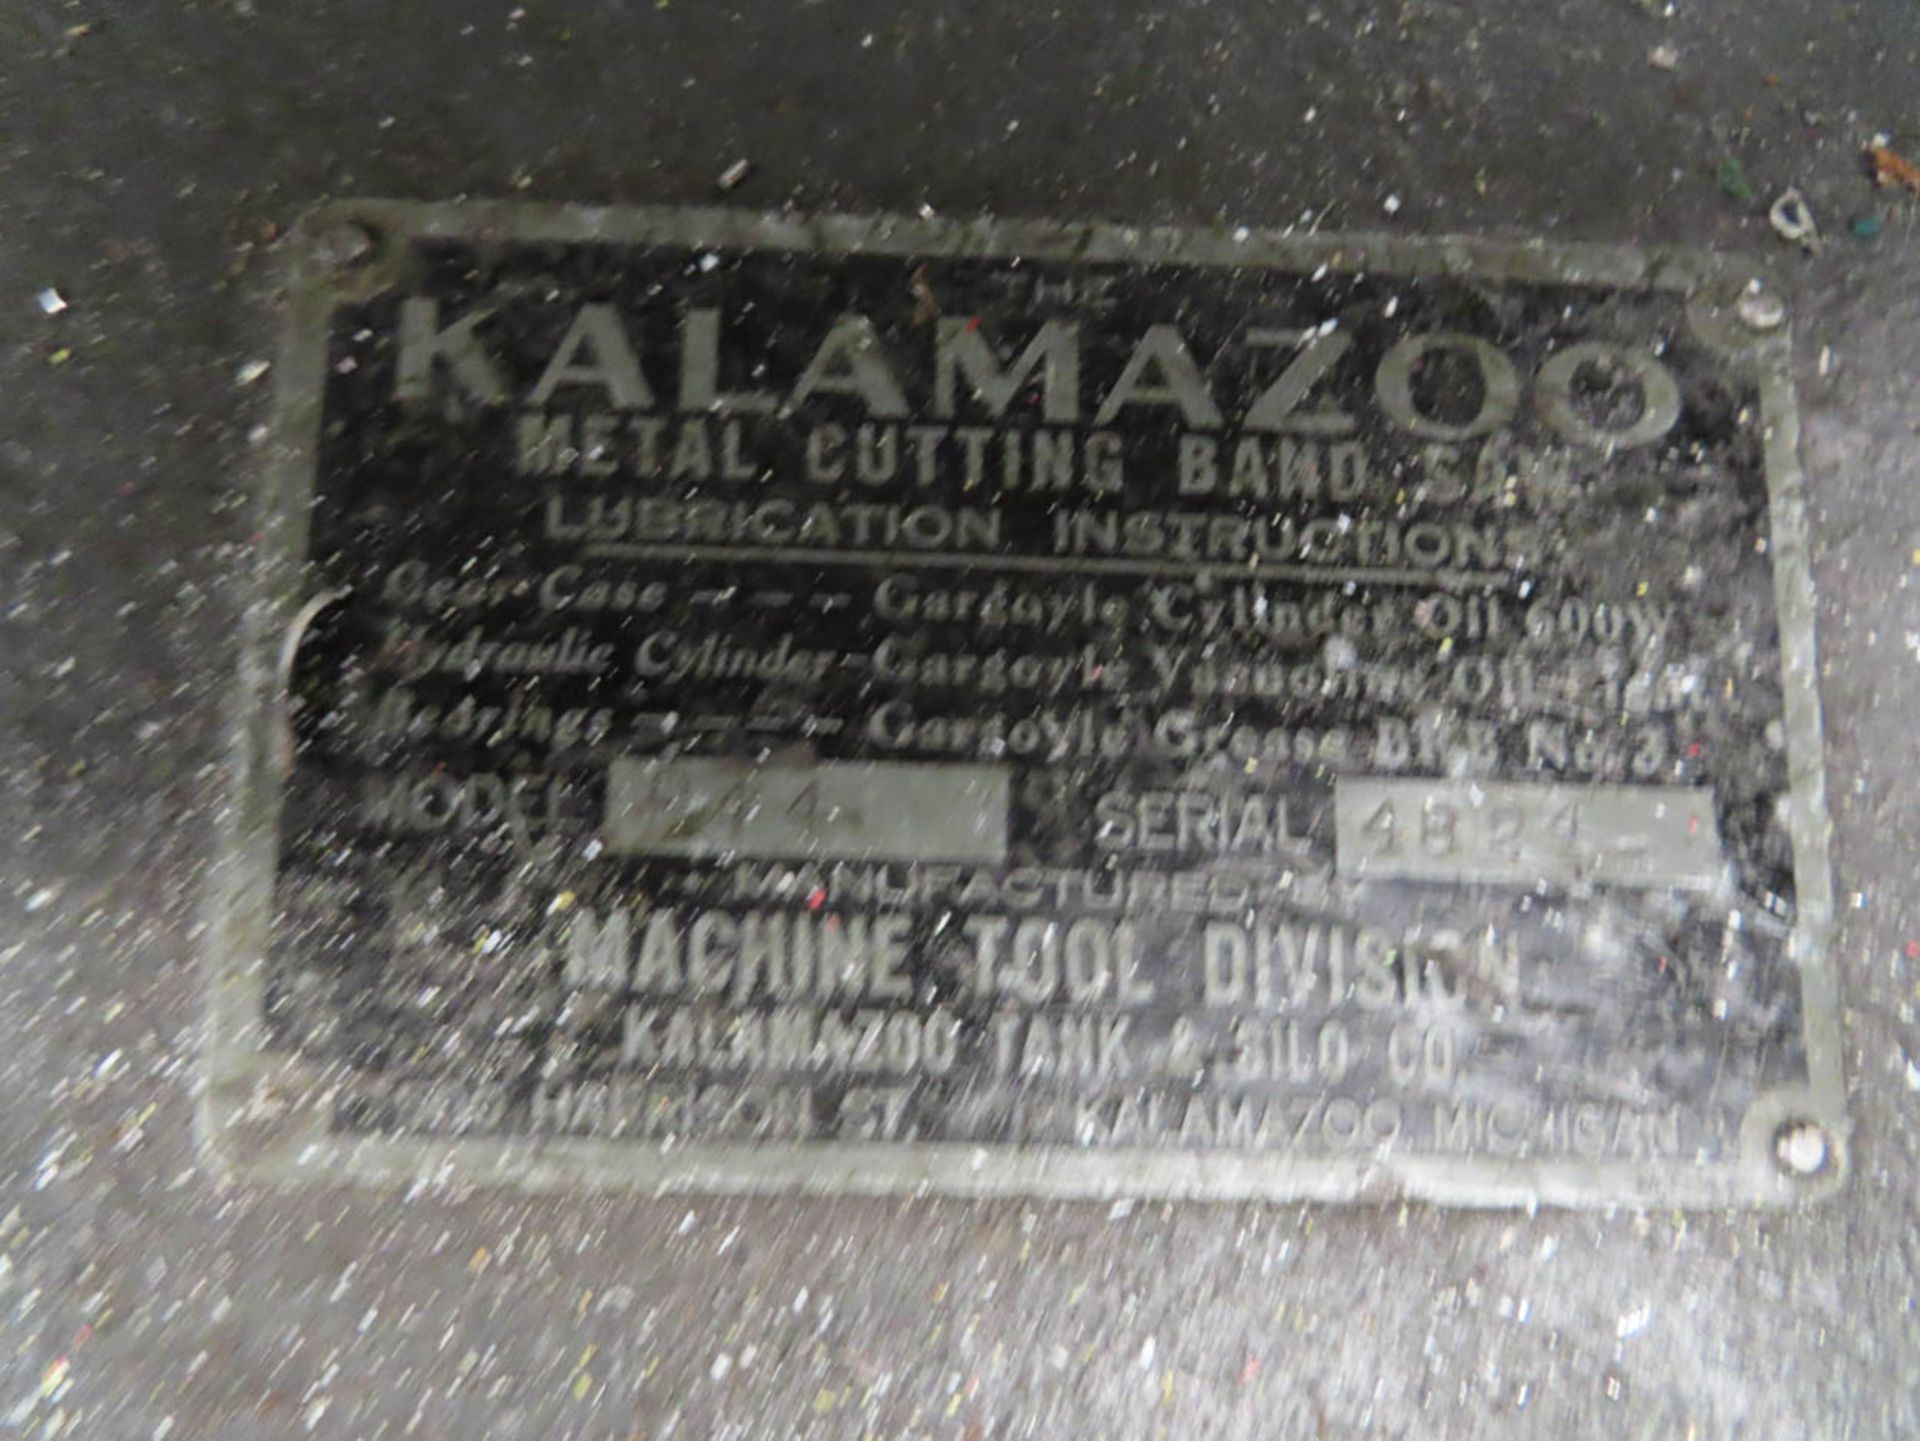 Kalamazoo 8" X 14" Mdl P44 Horiztonal BandSaw - Image 3 of 3